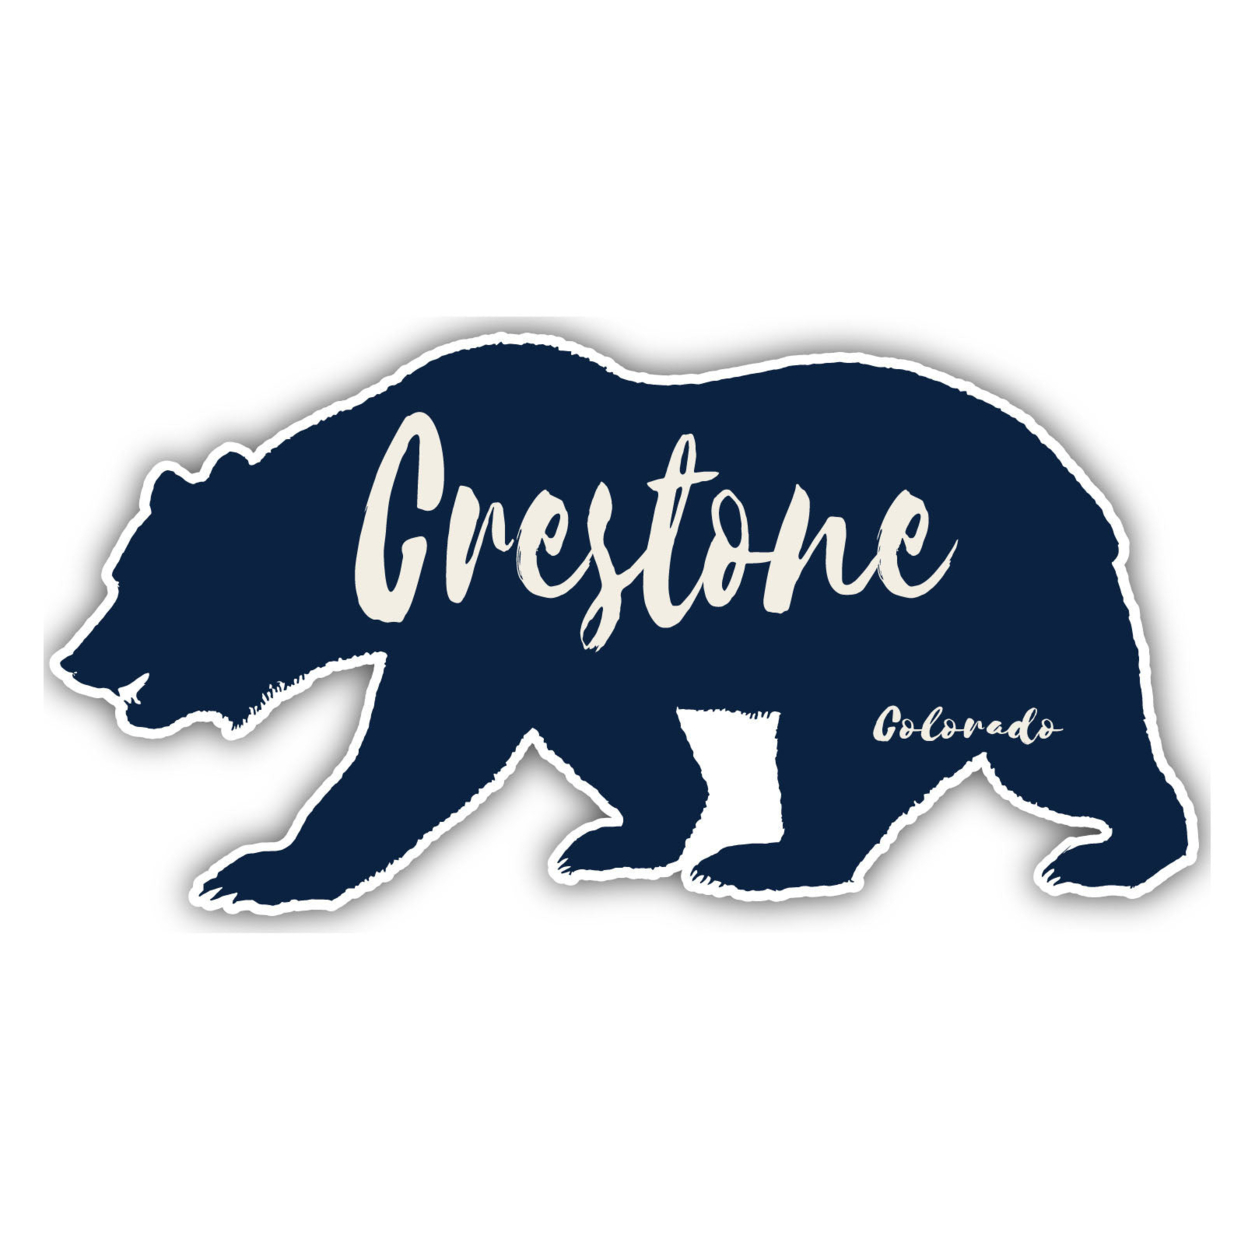 Crestone Colorado Souvenir Decorative Stickers (Choose Theme And Size) - 4-Pack, 6-Inch, Tent